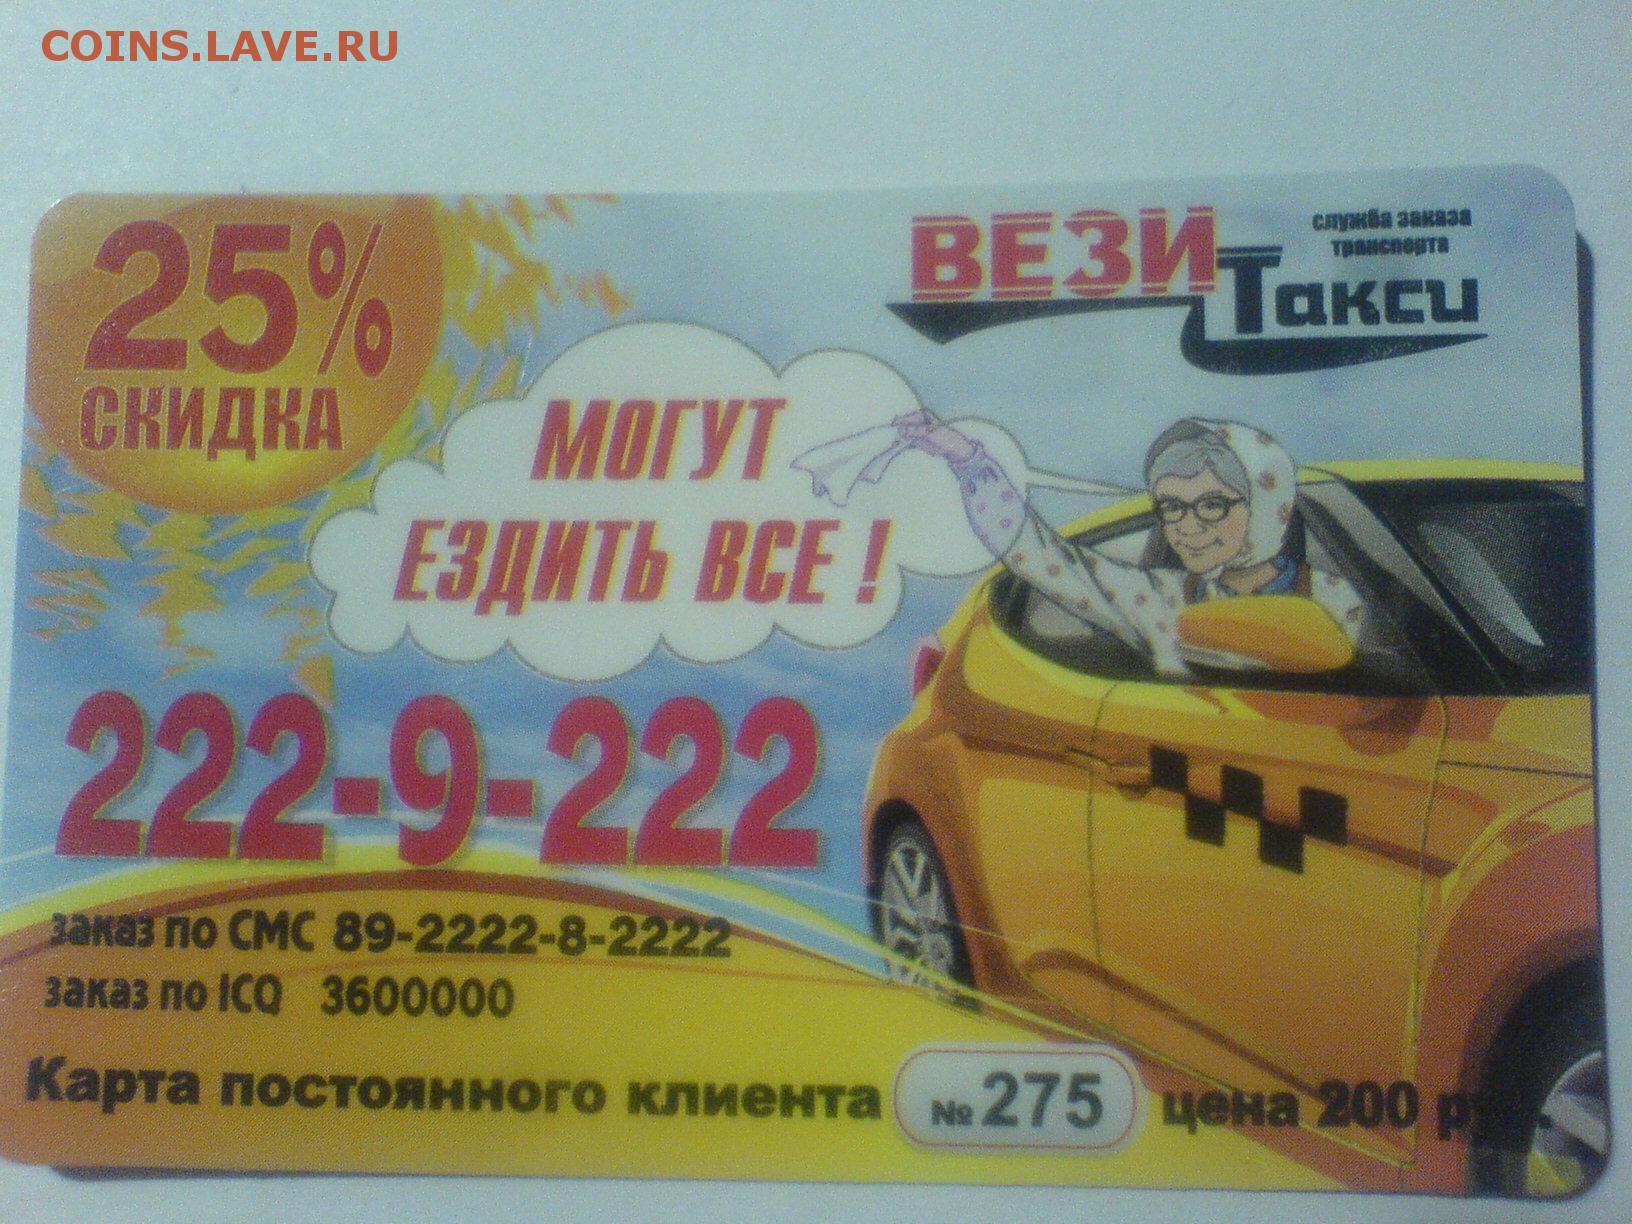 Везет цена. Такси везет визитки. Визитка такси. Везитвизитка такси вези. Такси везёт Воронеж.